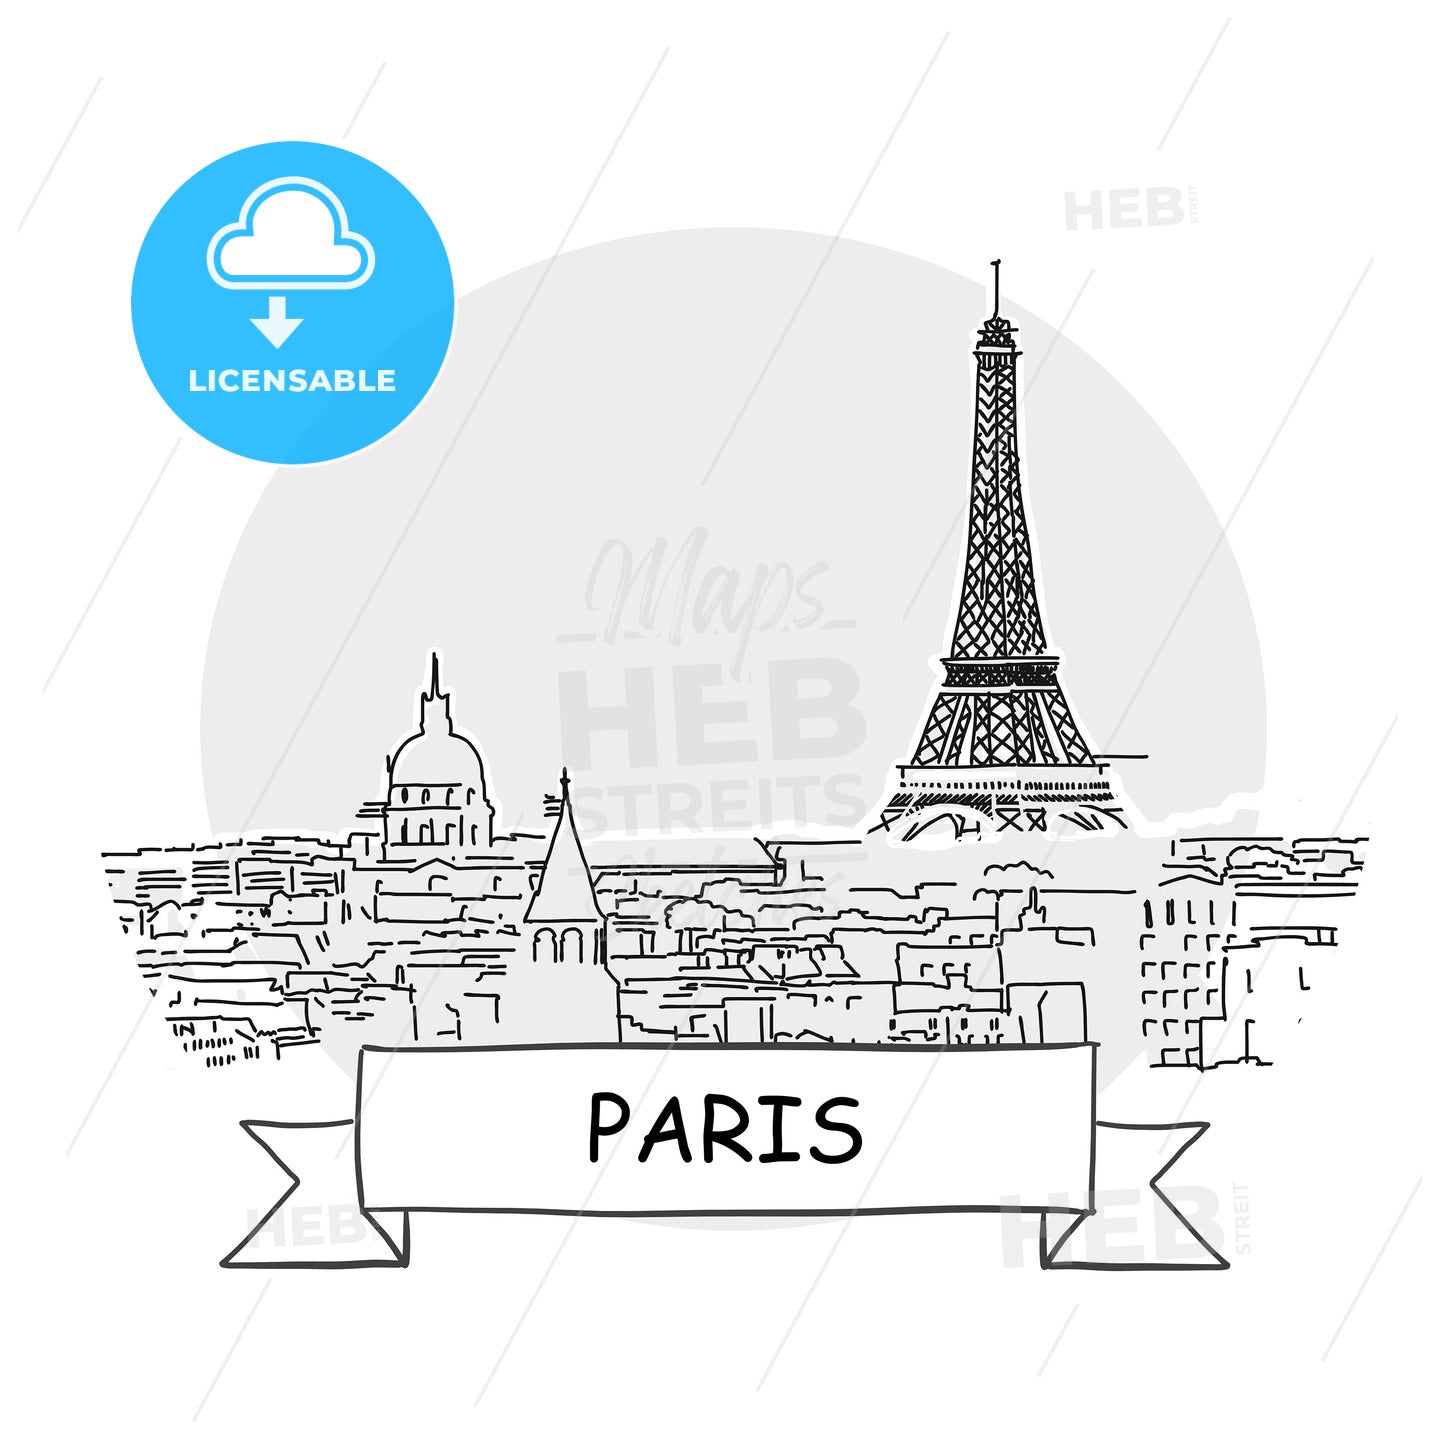 Paris hand-drawn urban vector sign – instant download